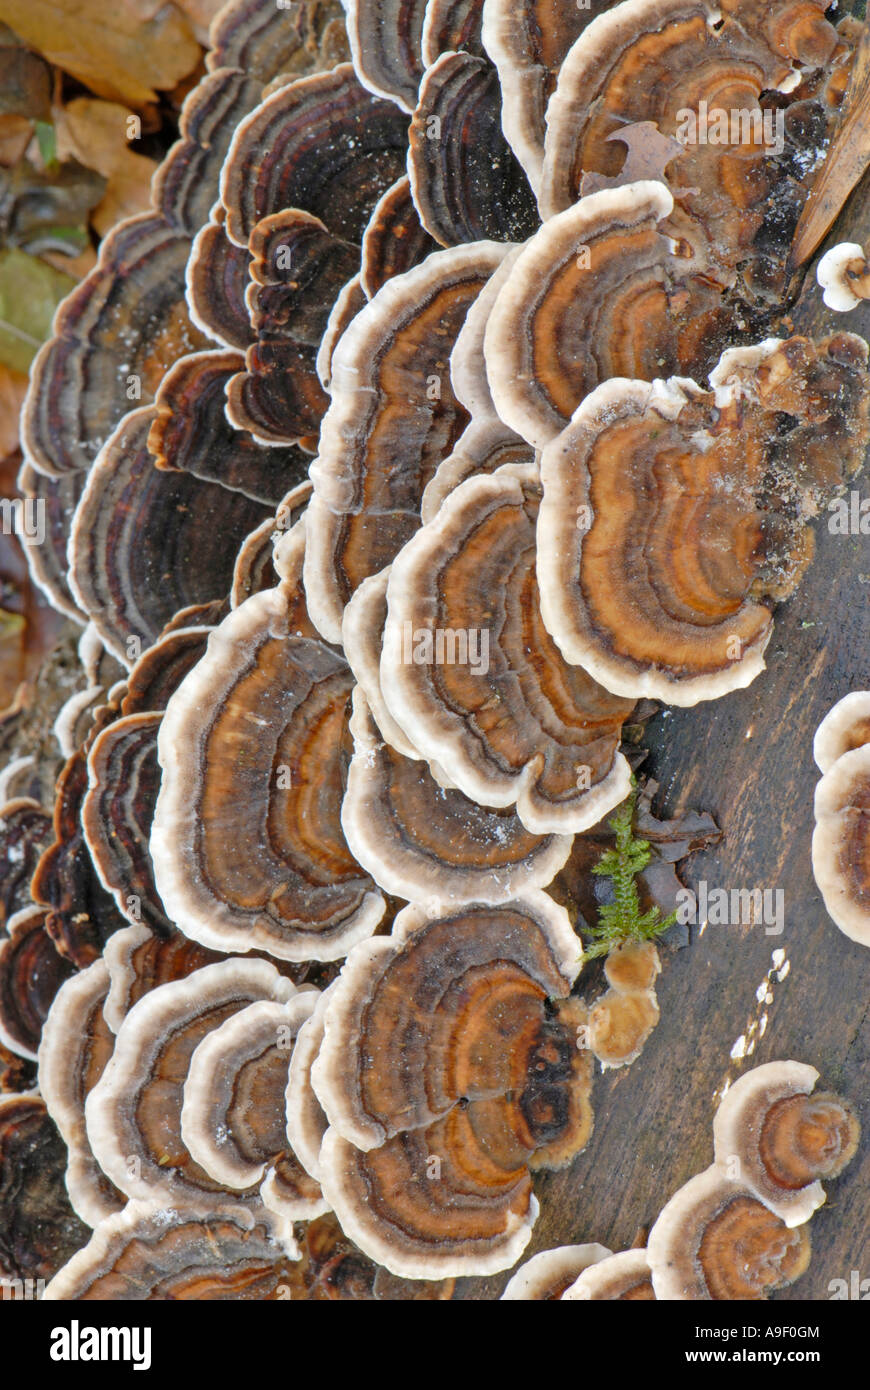 Queue de la Turquie, de champignons polypores multicolores (Trametes versicolor, Coriolus versicolor) sur bois Banque D'Images